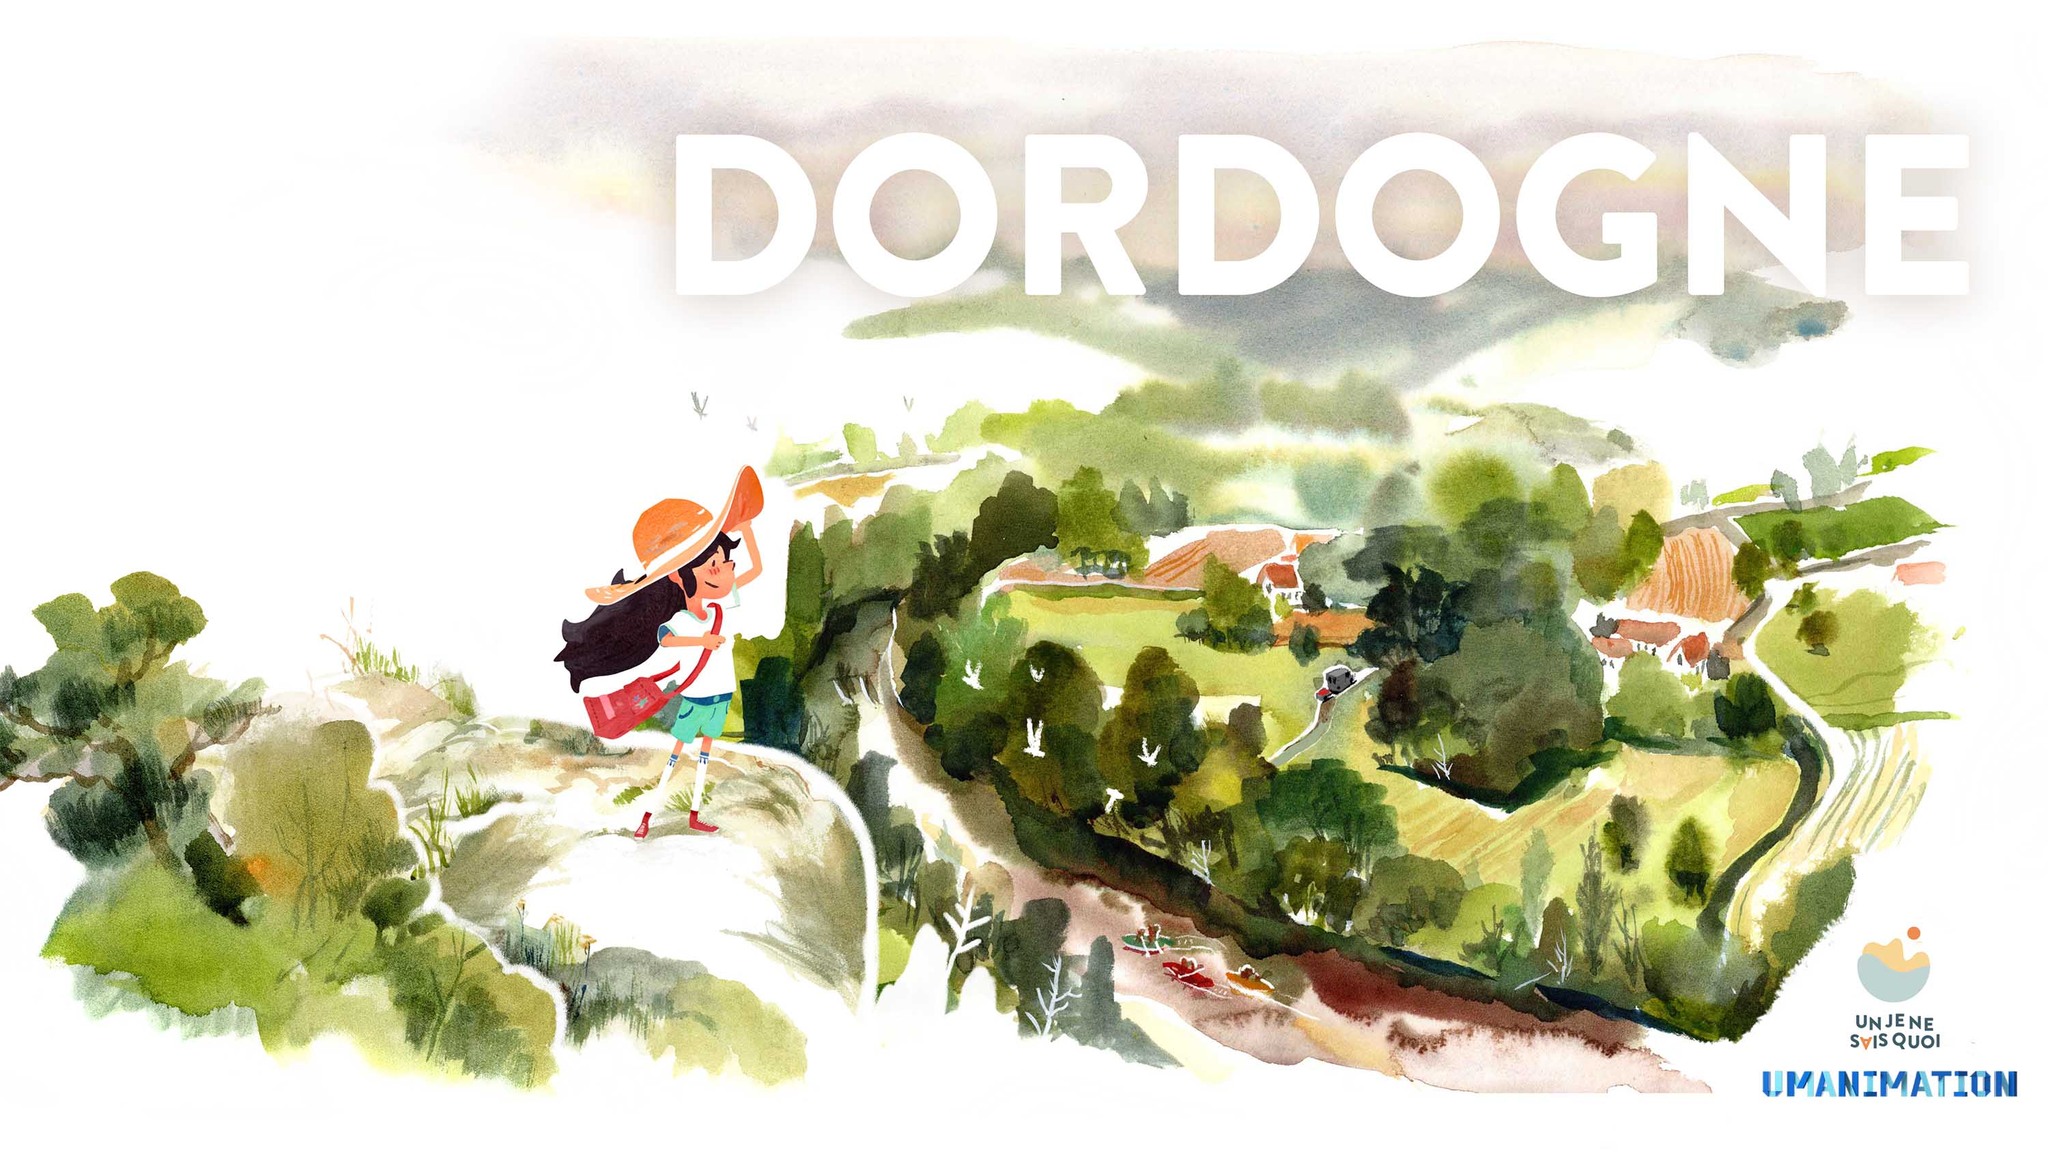 Apprendre la Langue: Dordogne, premier jeu vidéo en occitan!